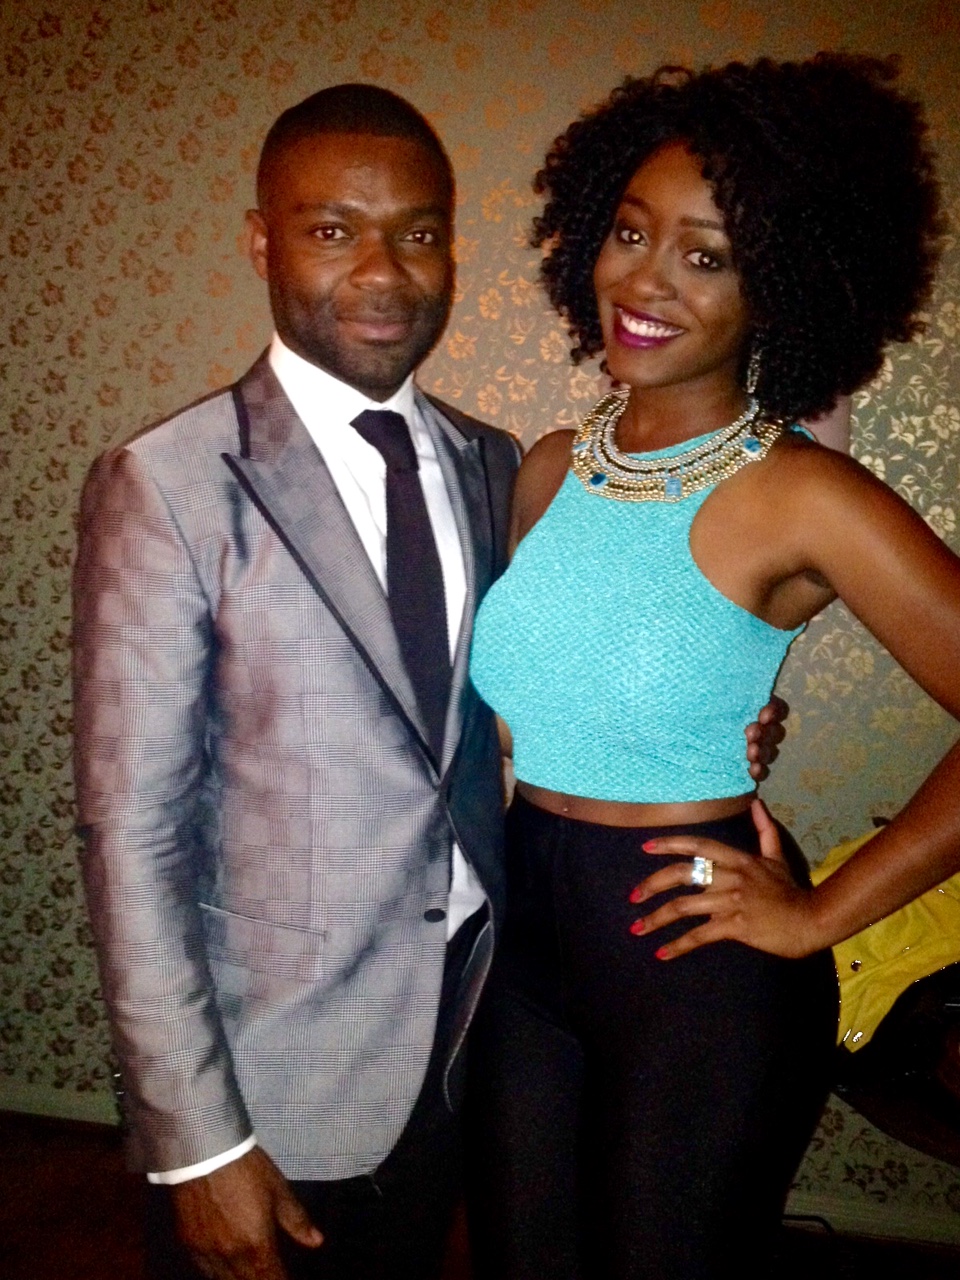 Jessica Obilom supports fellow Nigerian actor, David Oyelowo, at the Selma Pre-Oscars 2015 event.